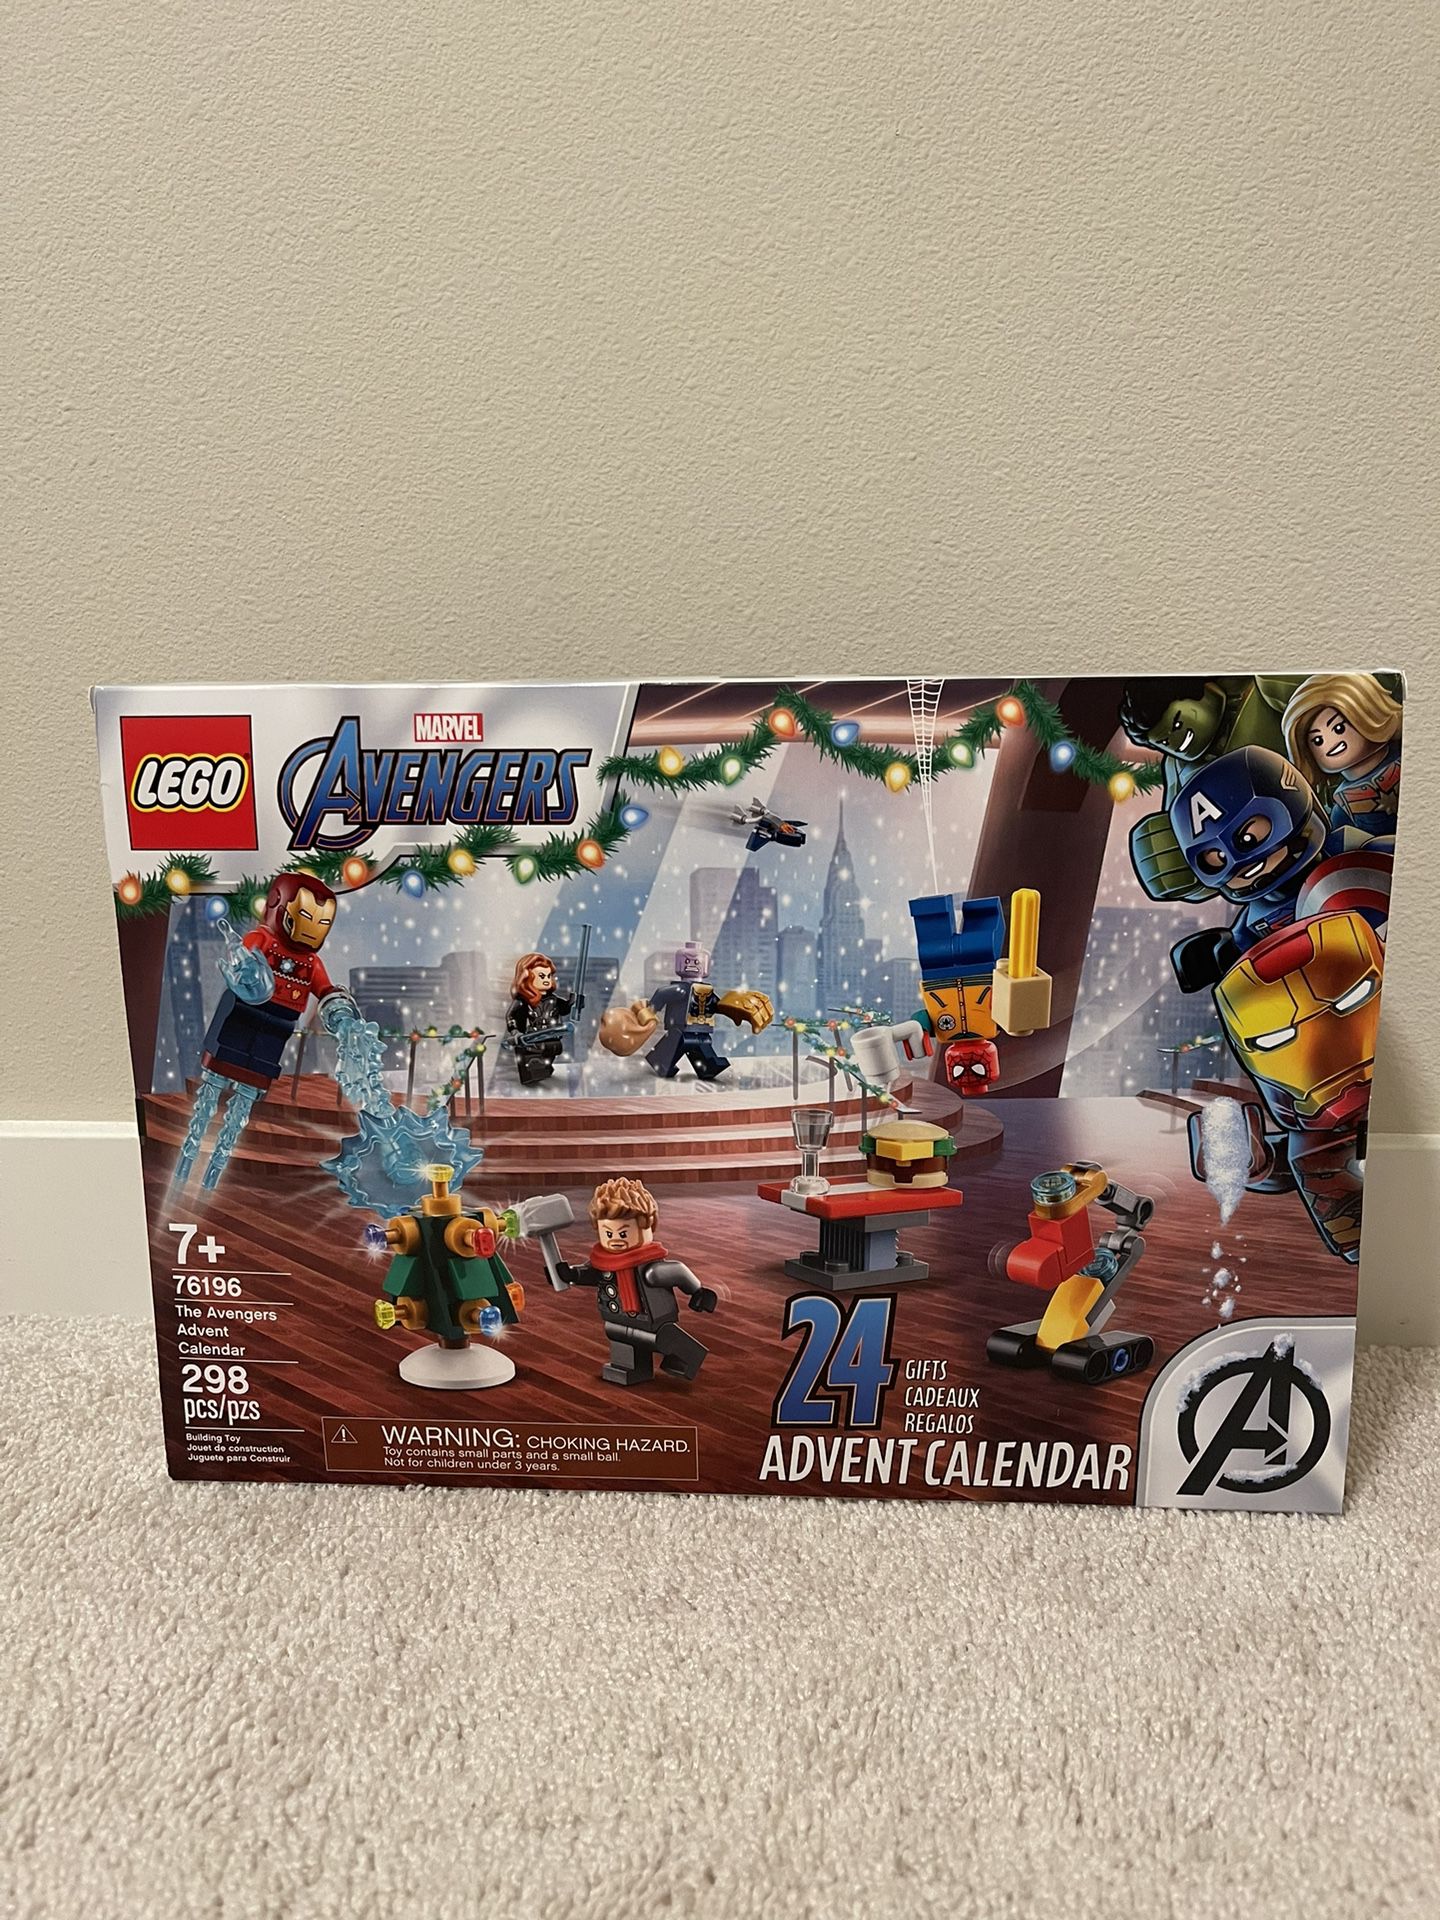 Lego Avenger Advent Calendar